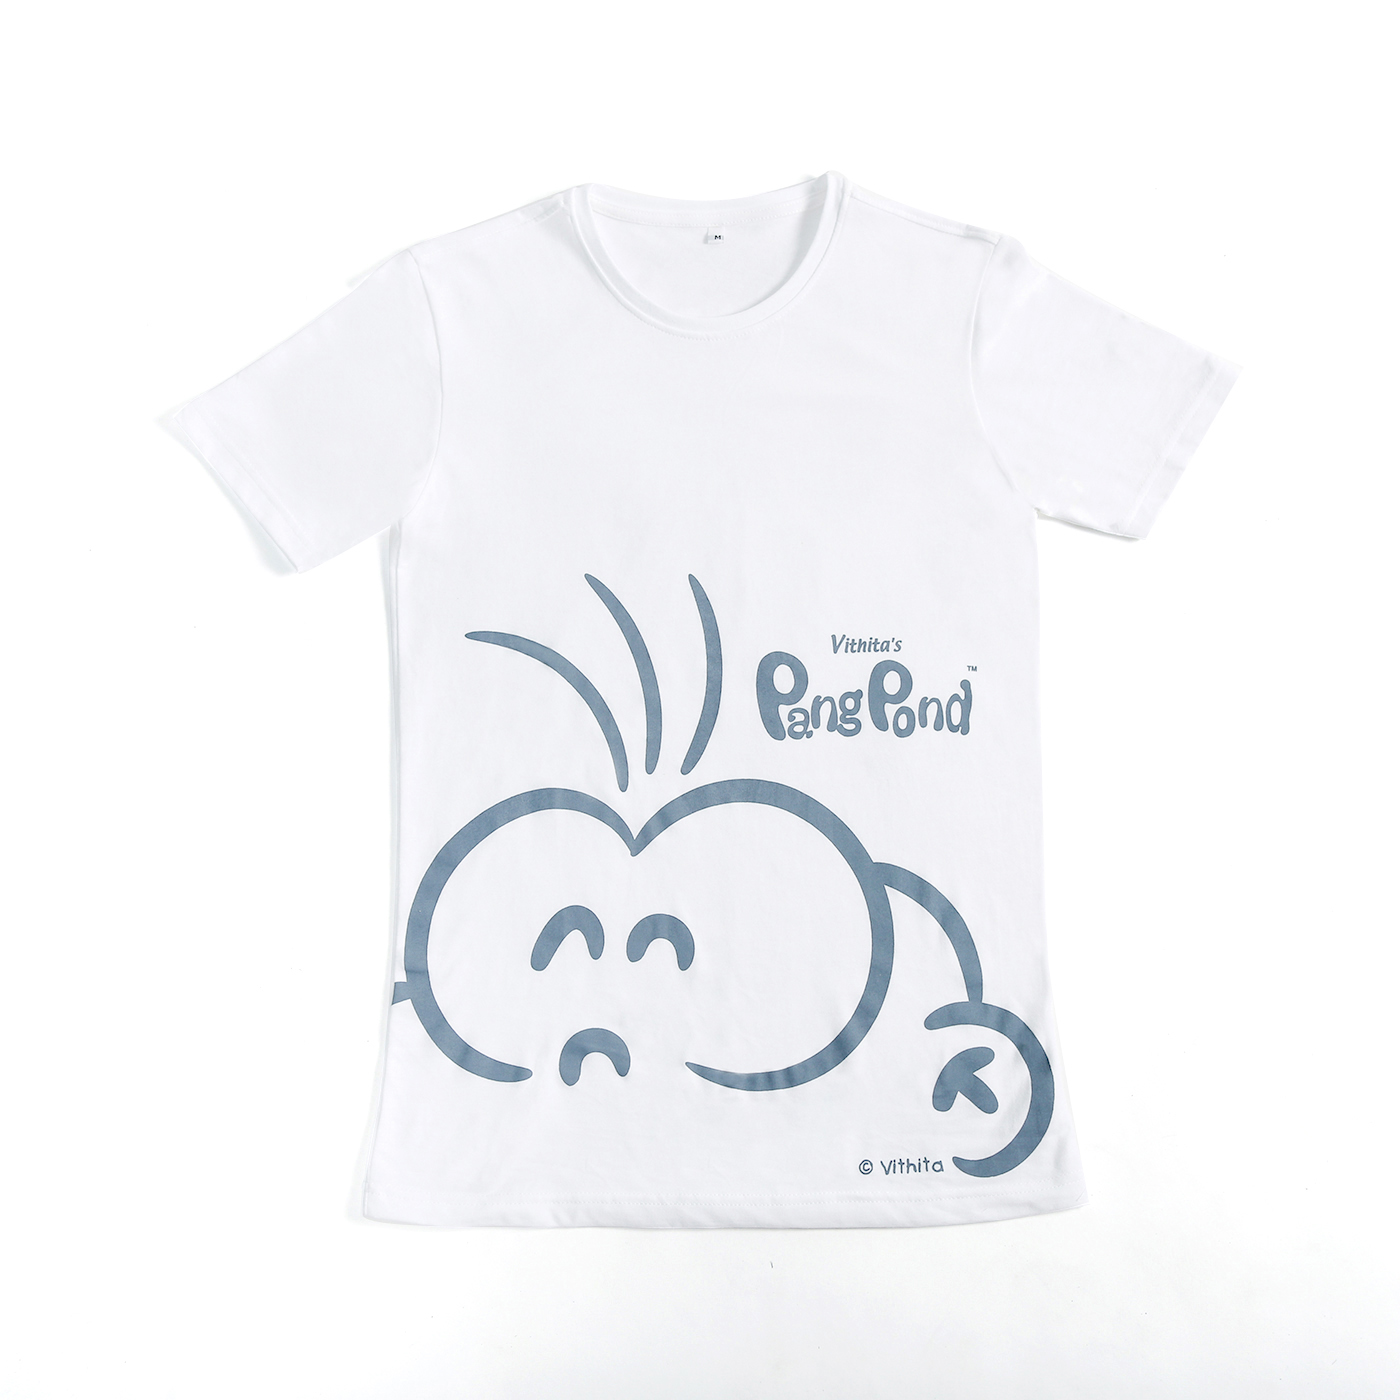 PangPond T-shirt: White [M]